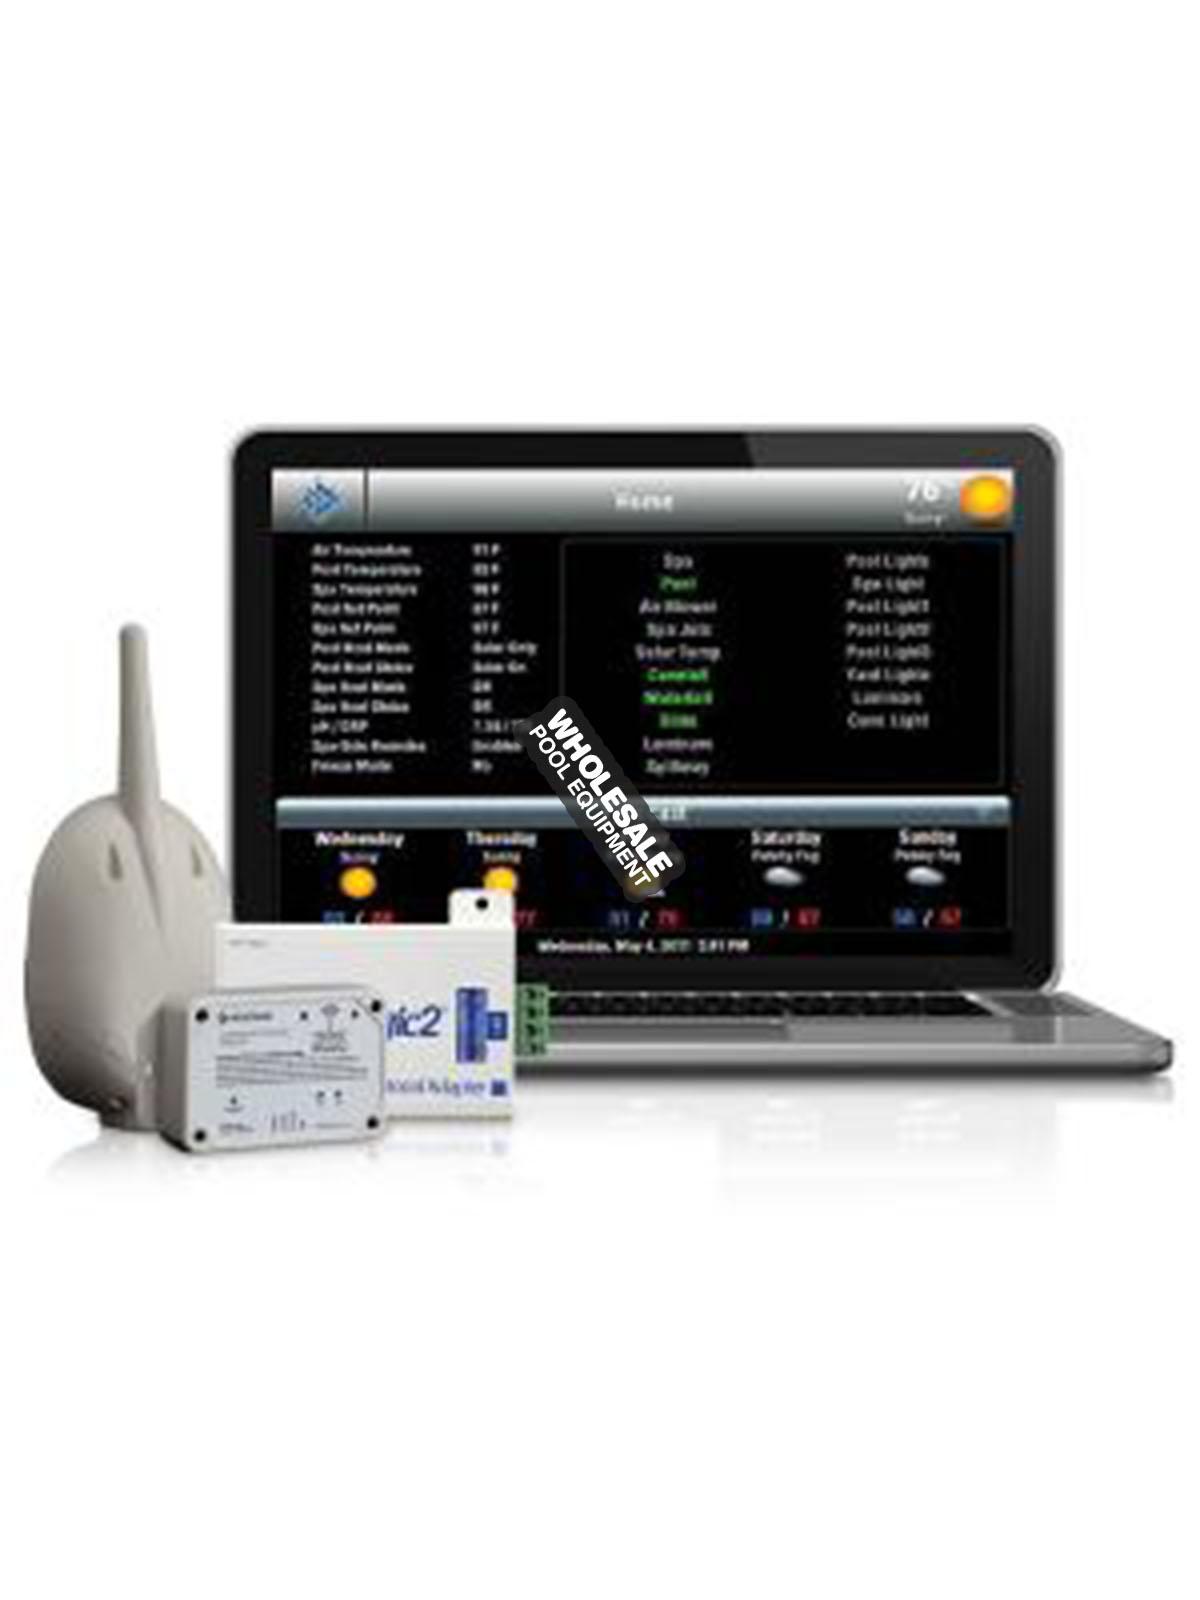 pentair screenlogic2 interface protocol adapter